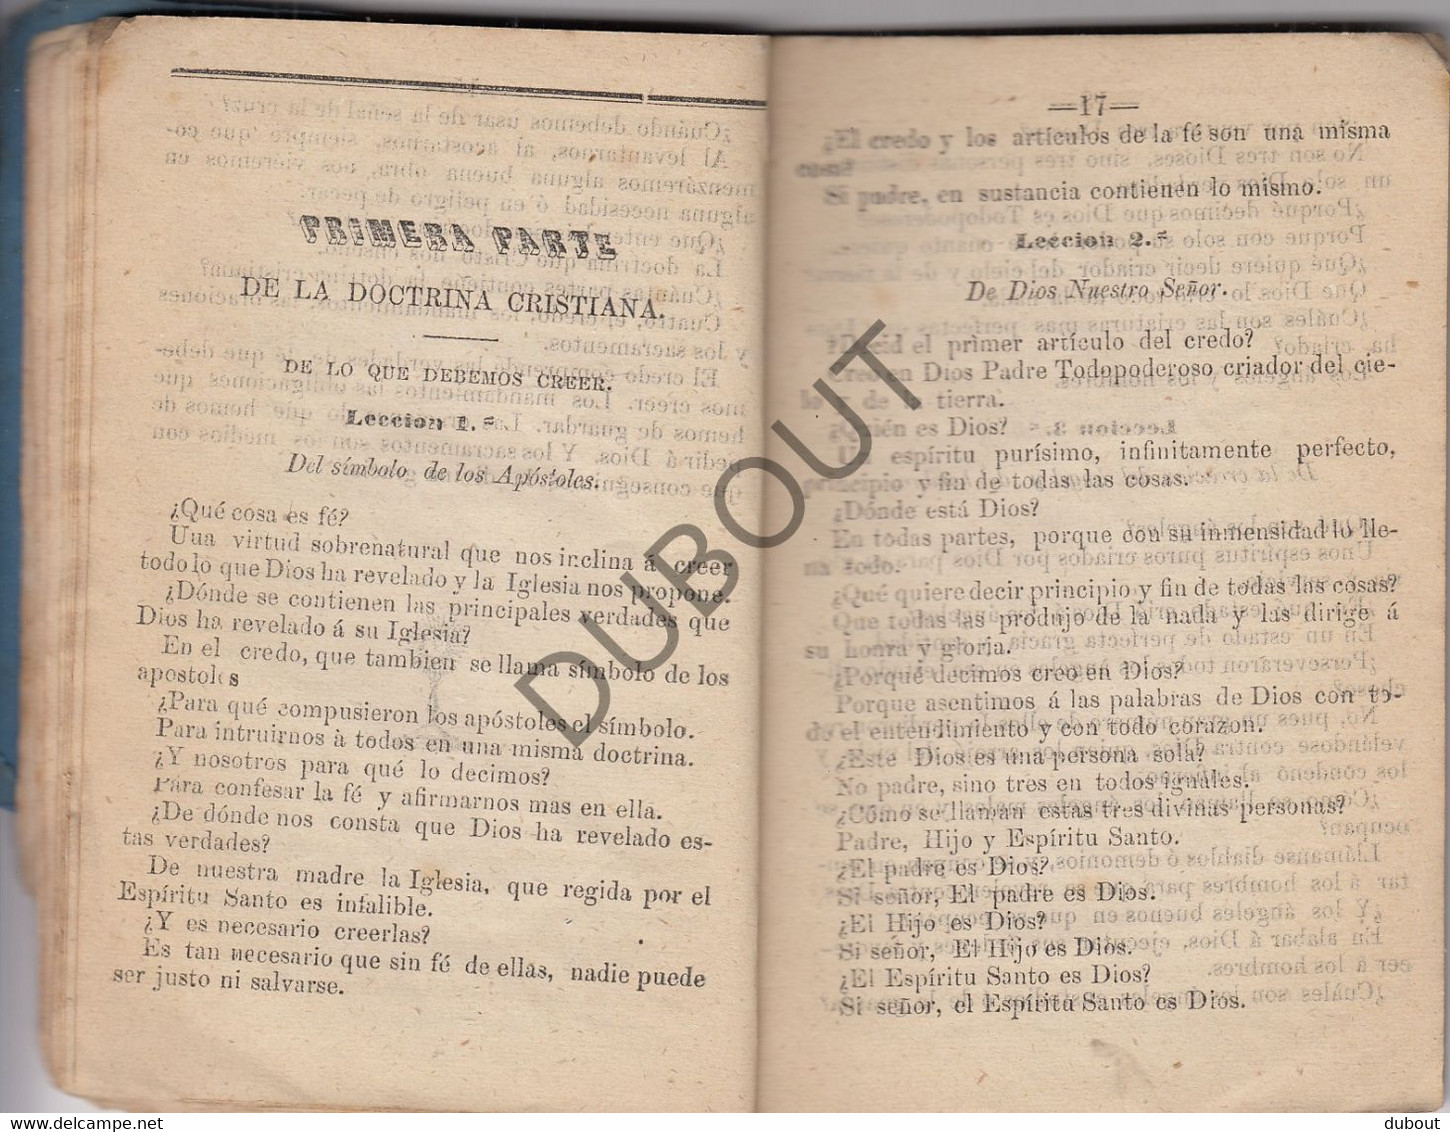 Catecismo - D. Gil Esteve - 1868 - Printed In  Puerto-Rico!! (W164) - Philosophy & Religion